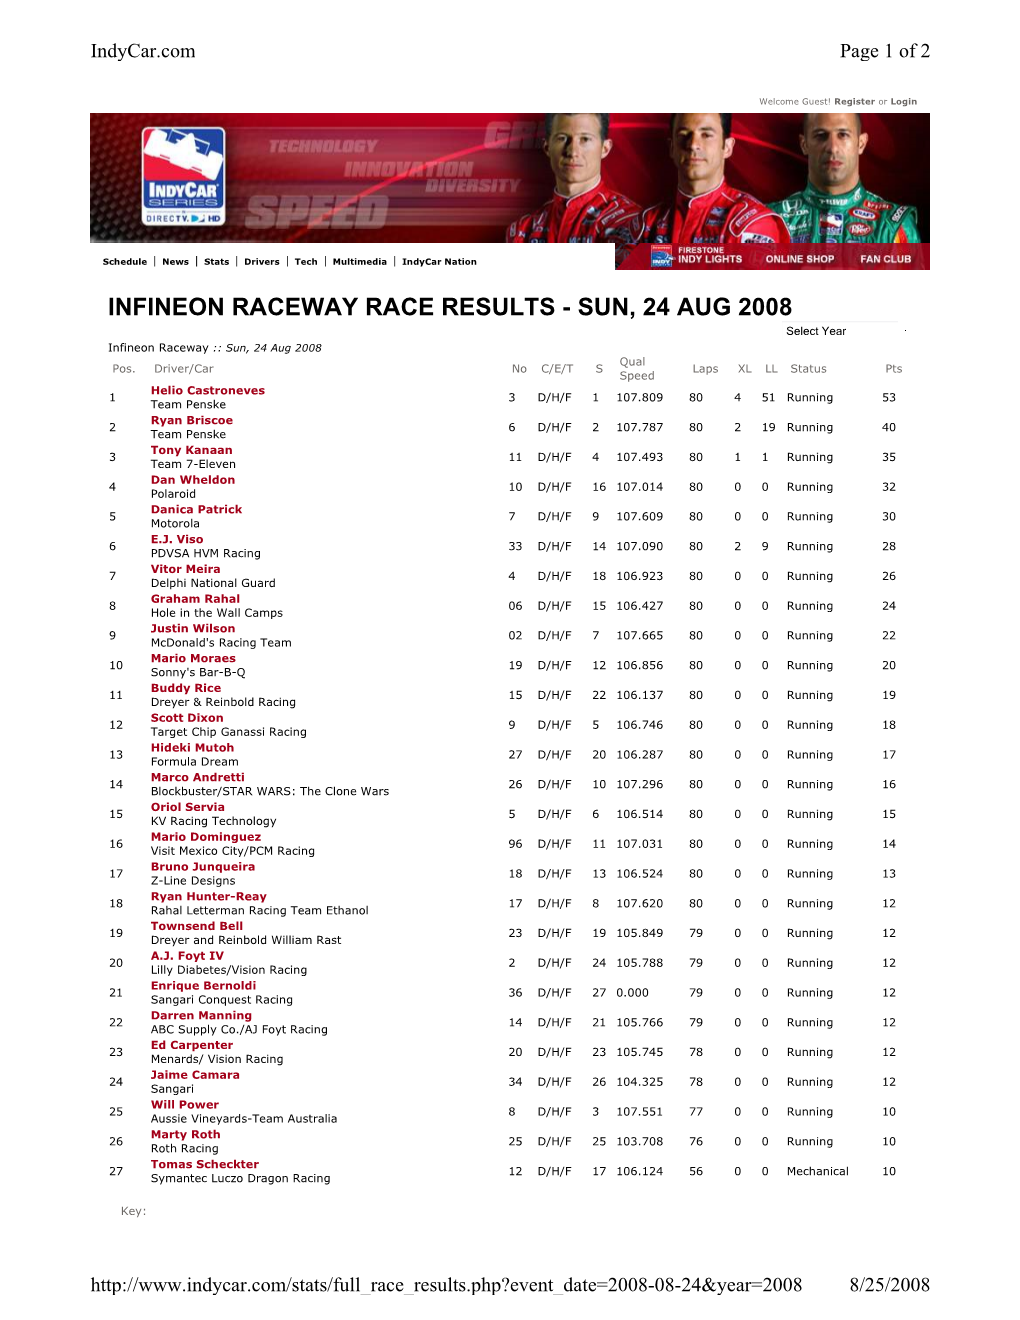 INFINEON RACEWAY RACE RESULTS, SUN, 24 AUG 2008-Pdf